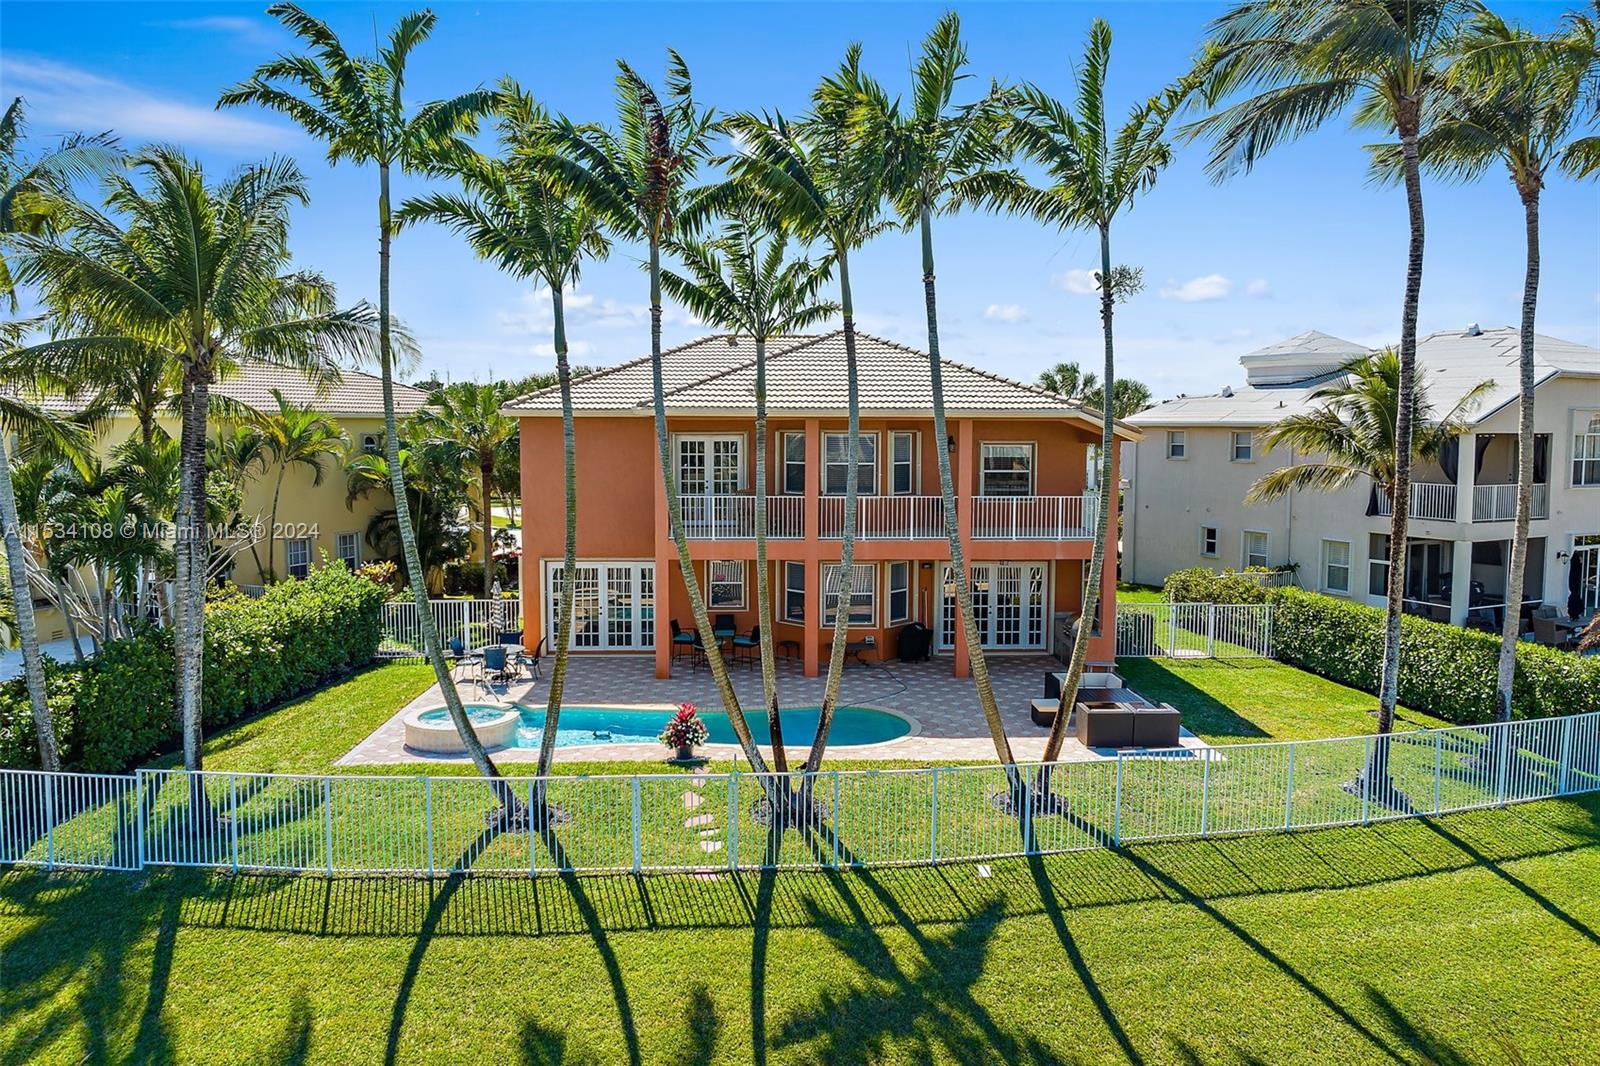 Property for Sale at 2164 Bellcrest Cir Cir, Royal Palm Beach, Palm Beach County, Florida - Bedrooms: 6 
Bathrooms: 4  - $919,500